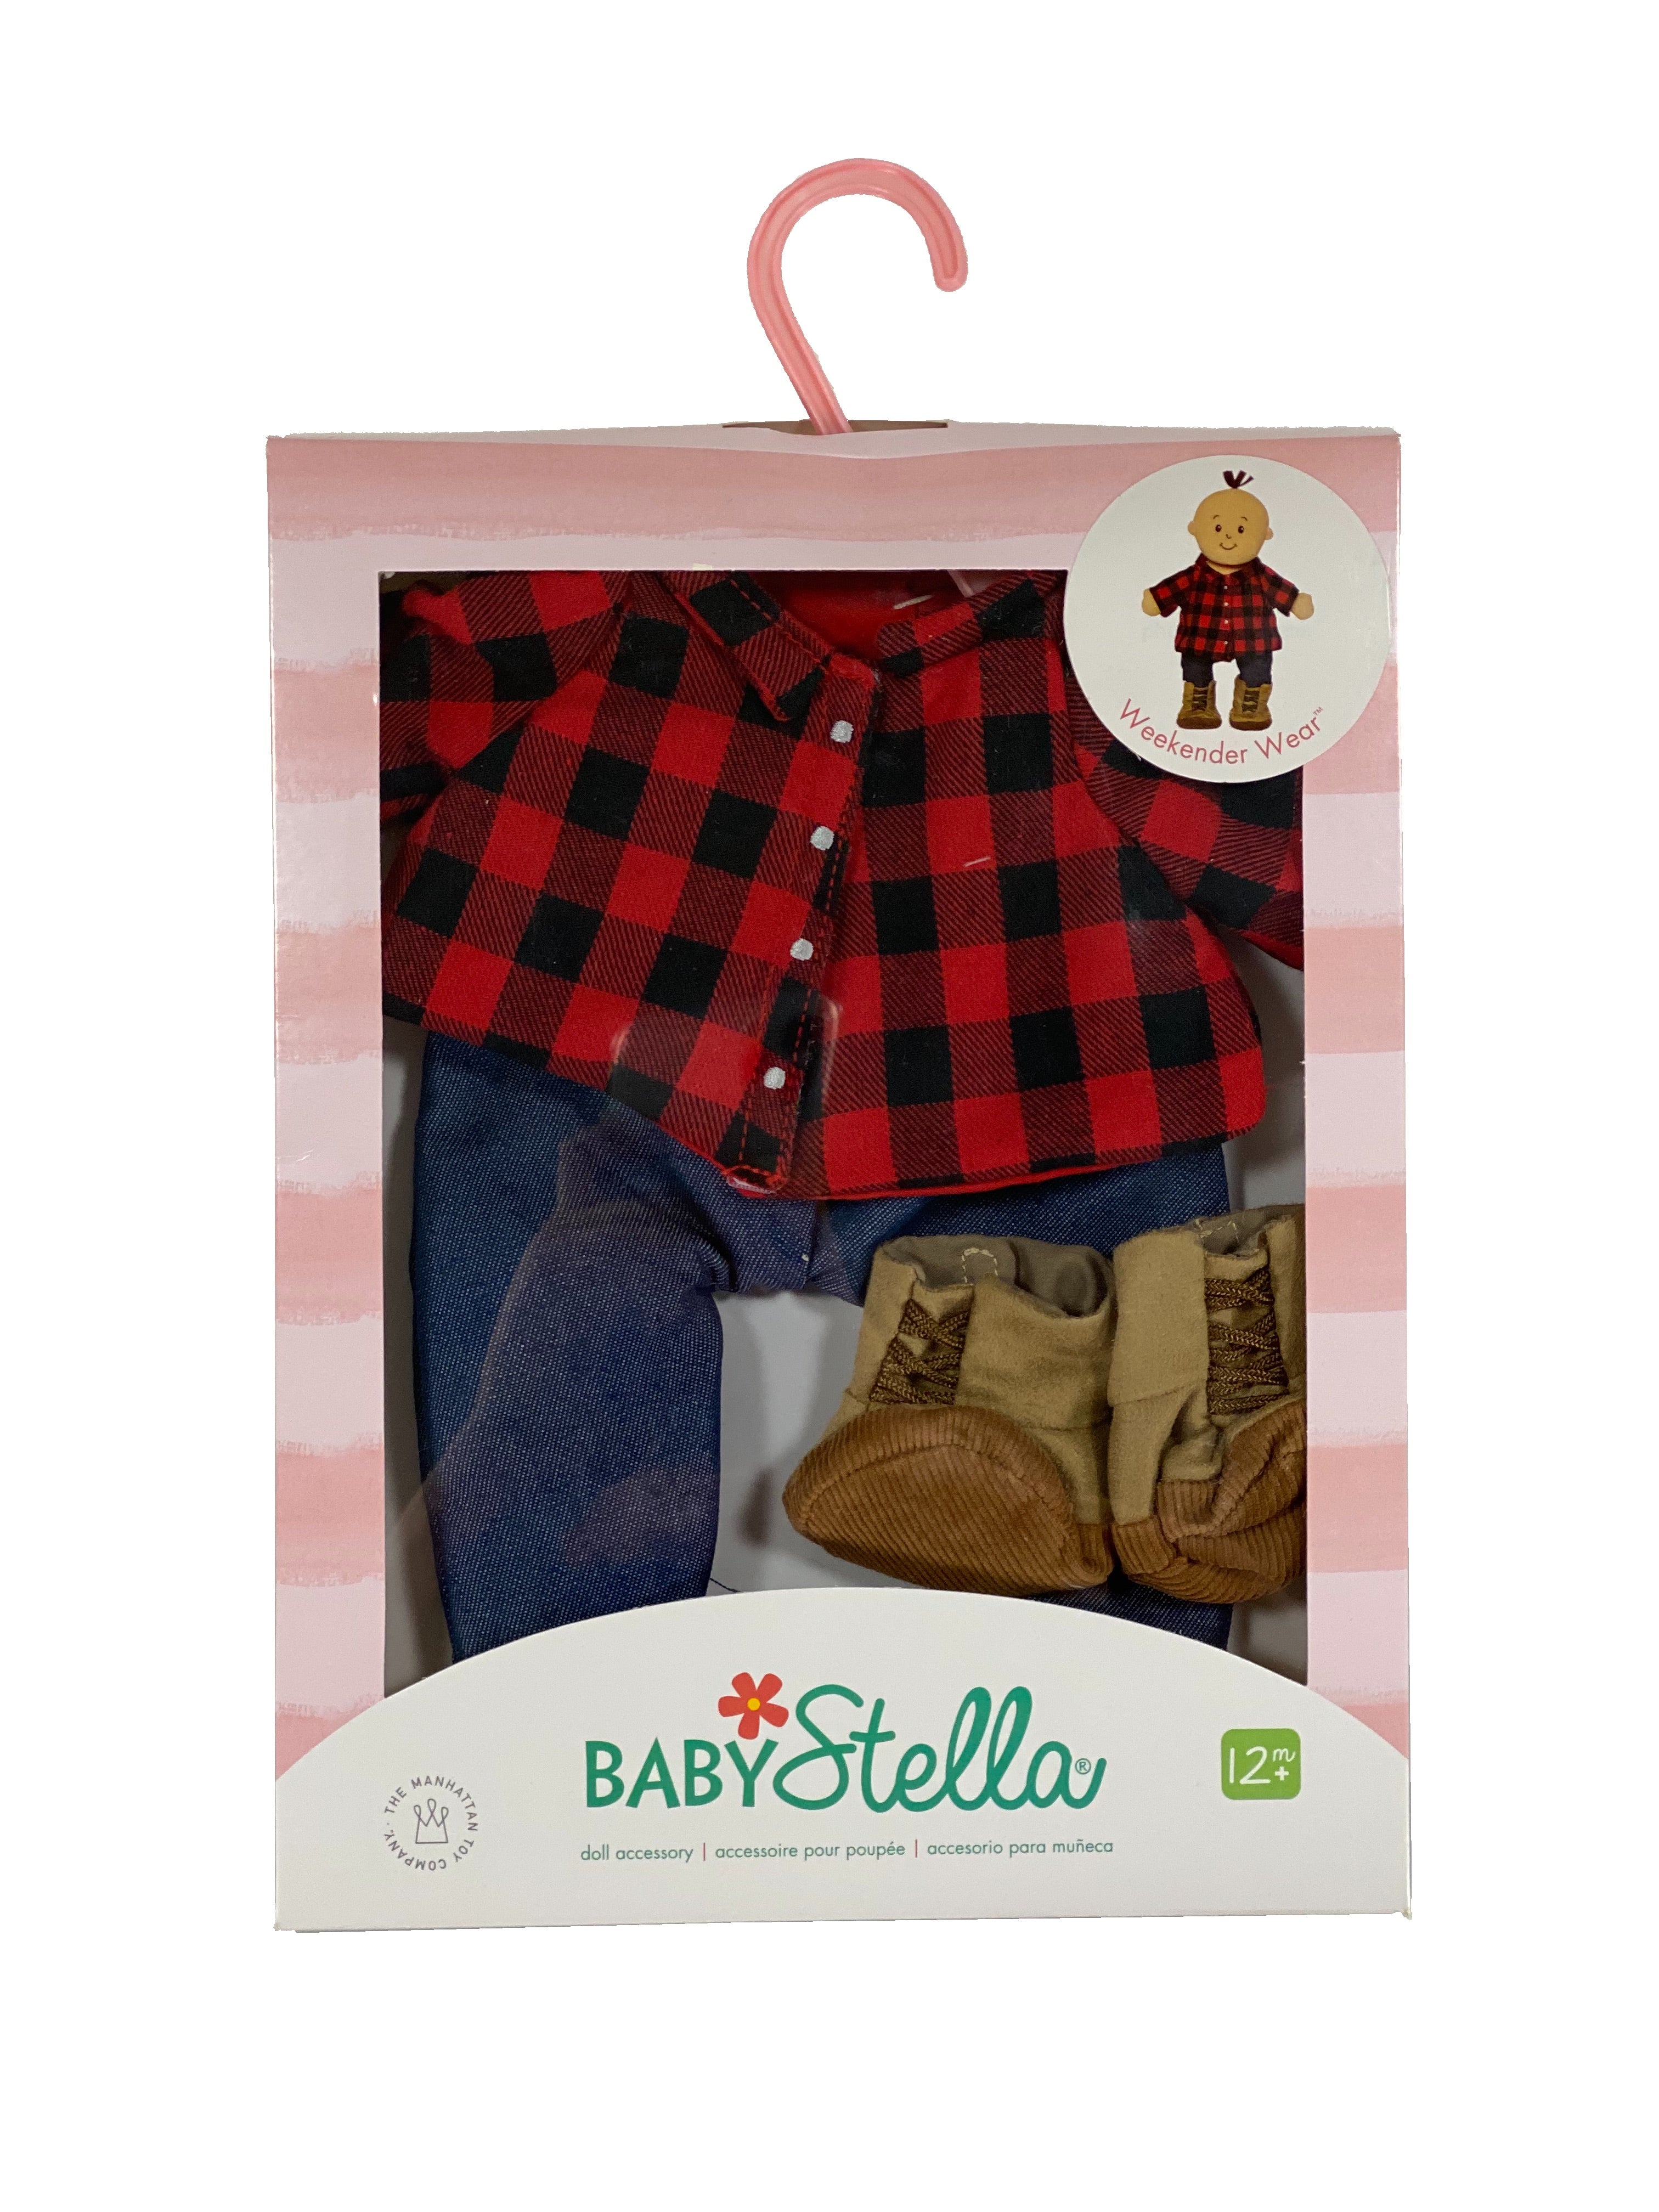 Baby Stella Outfit - Weekender Wear    